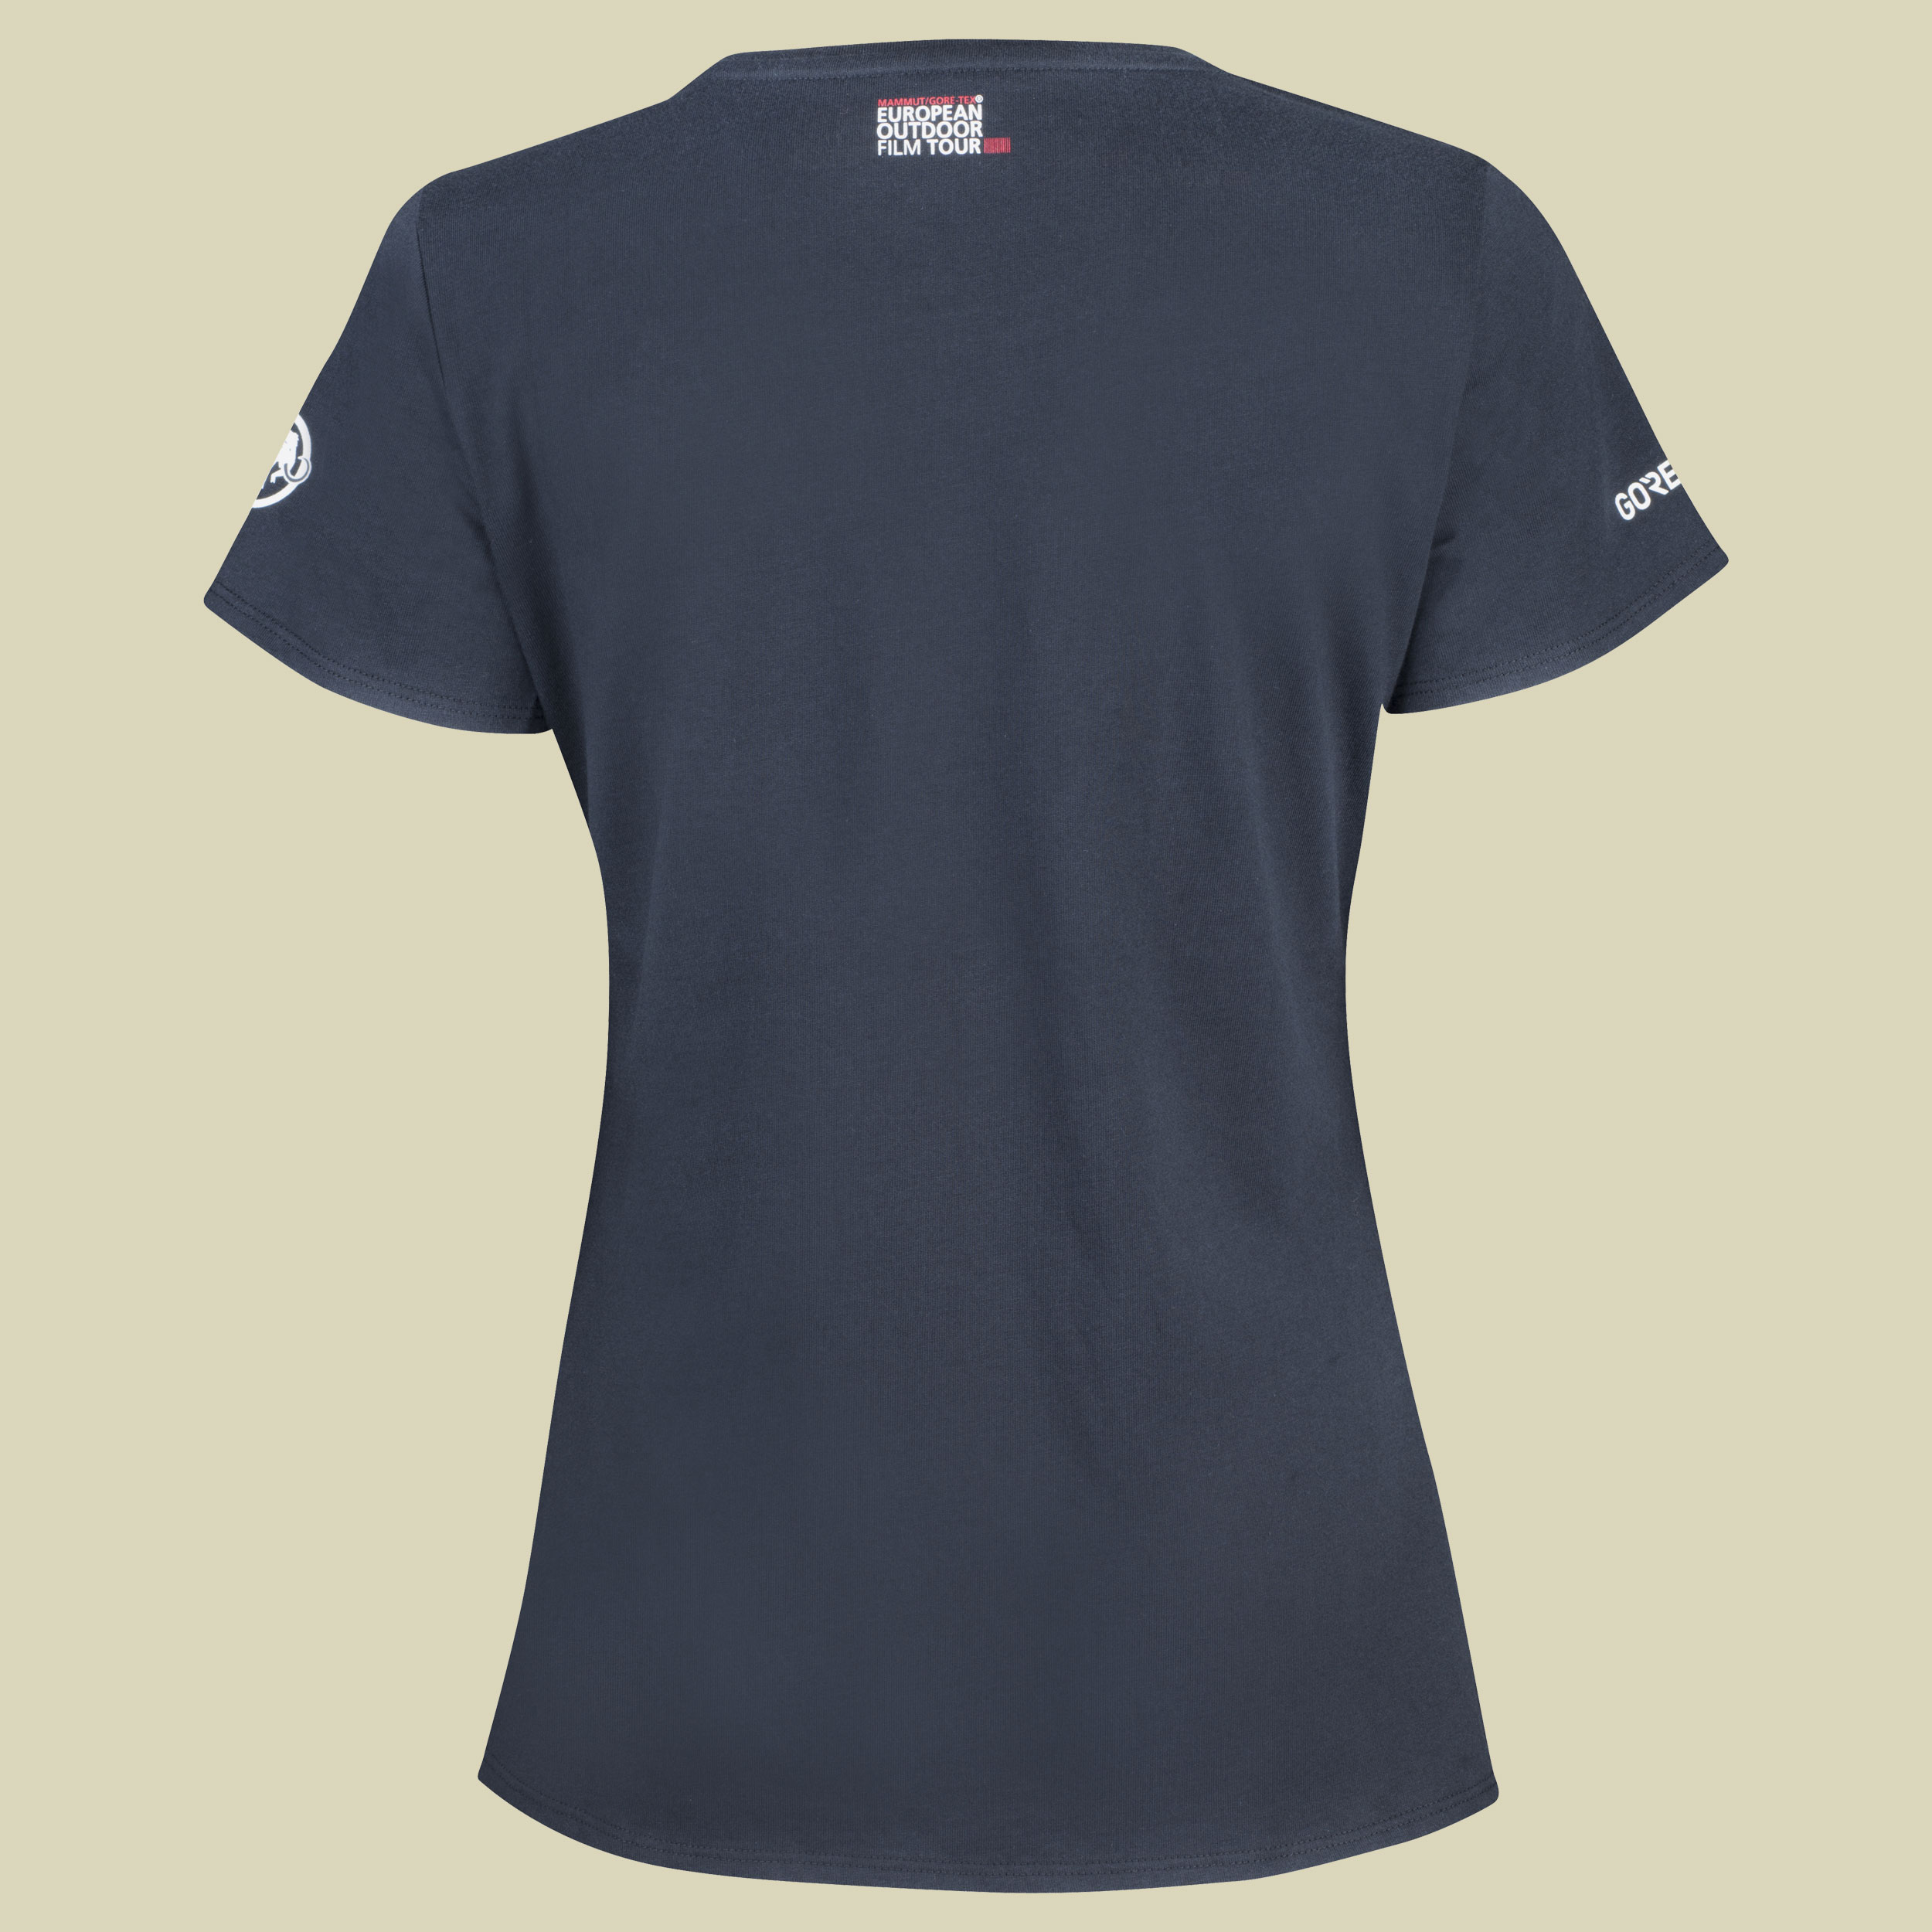 EOFT T-Shirt Women 2018/19 Größe L Farbe black